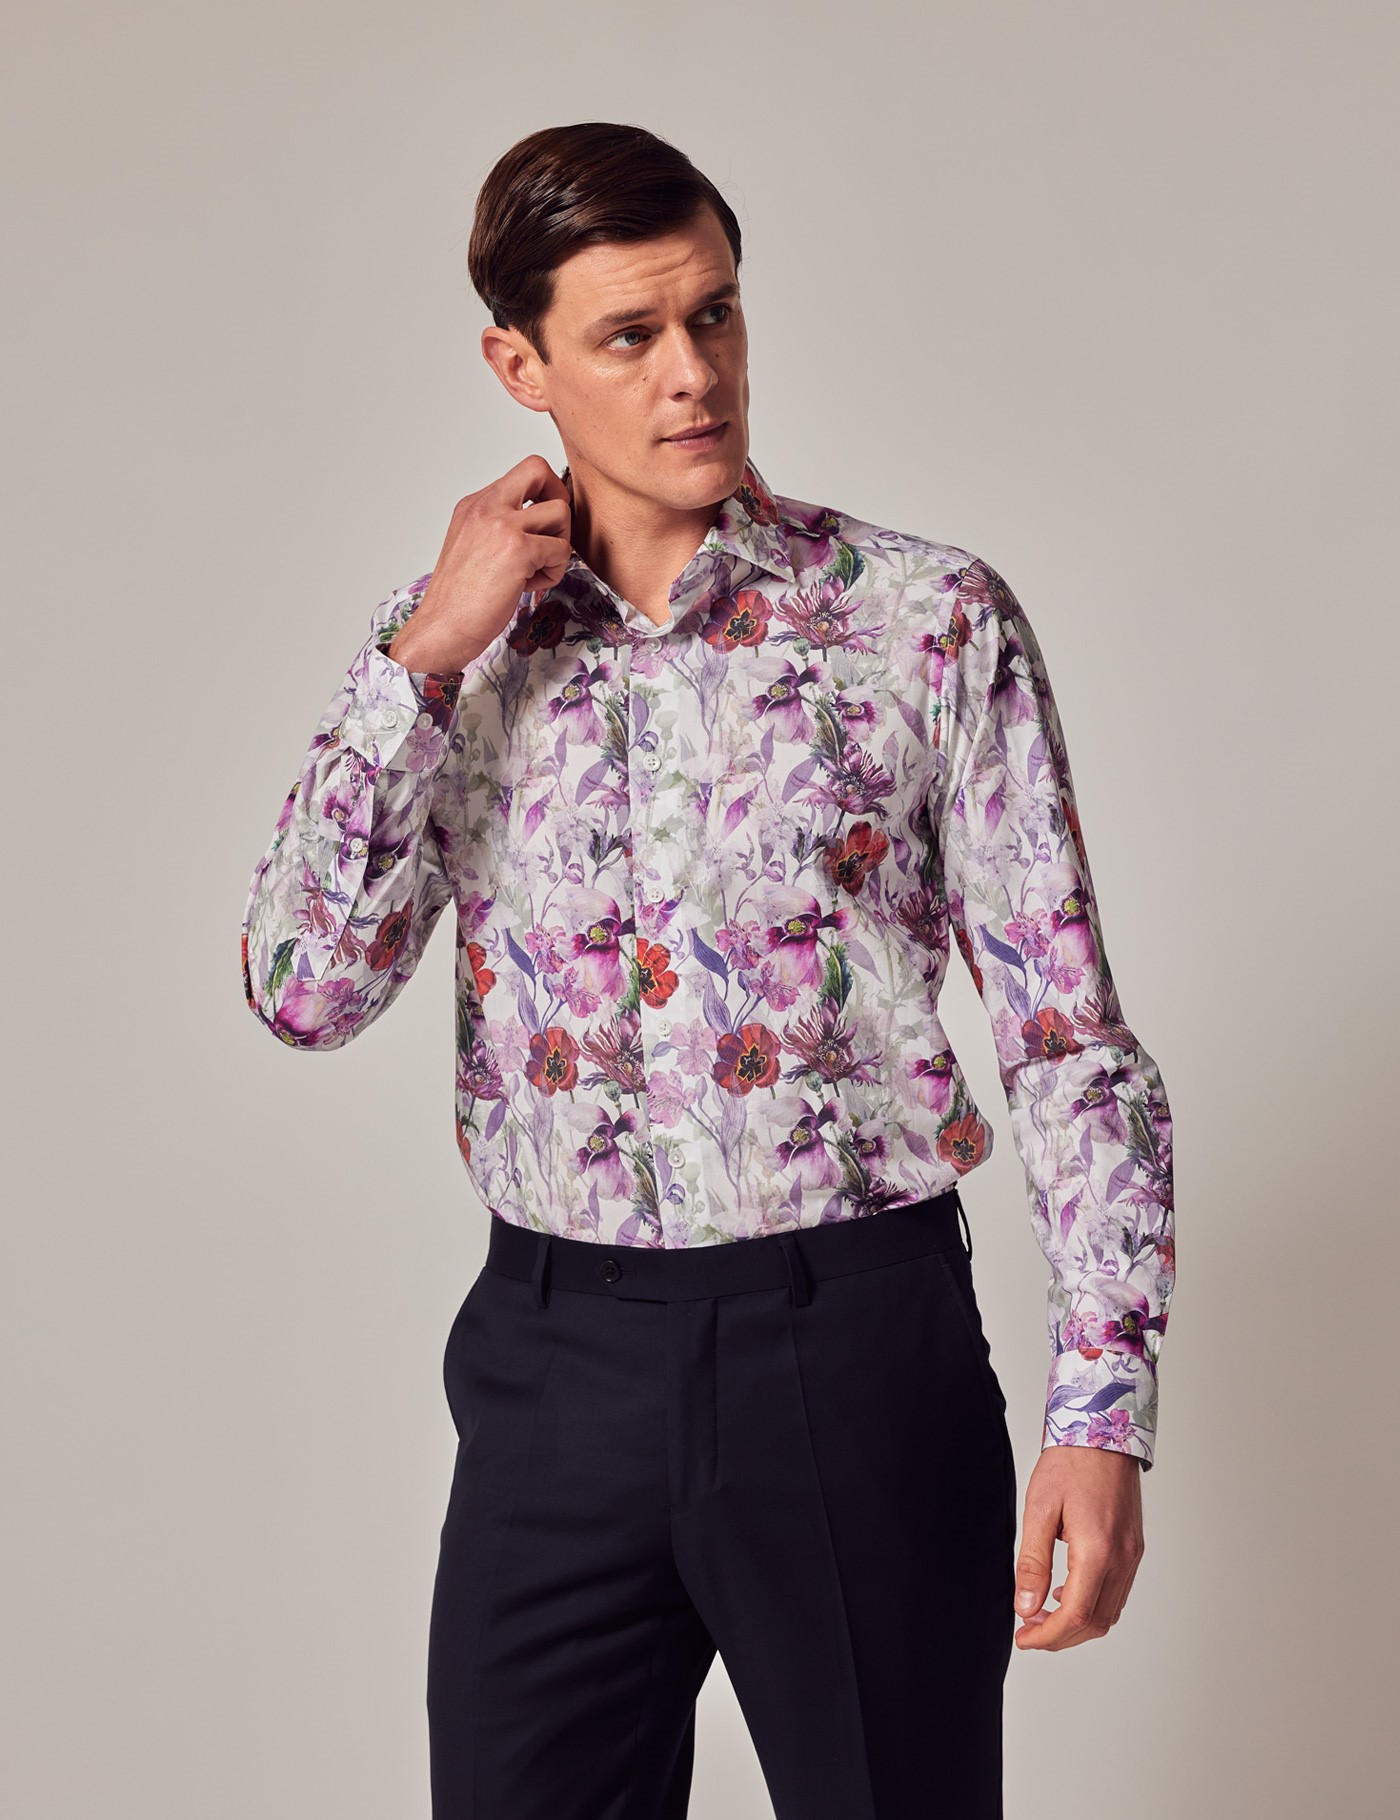 Men's Casual White & Purple Floral Slim Shirt